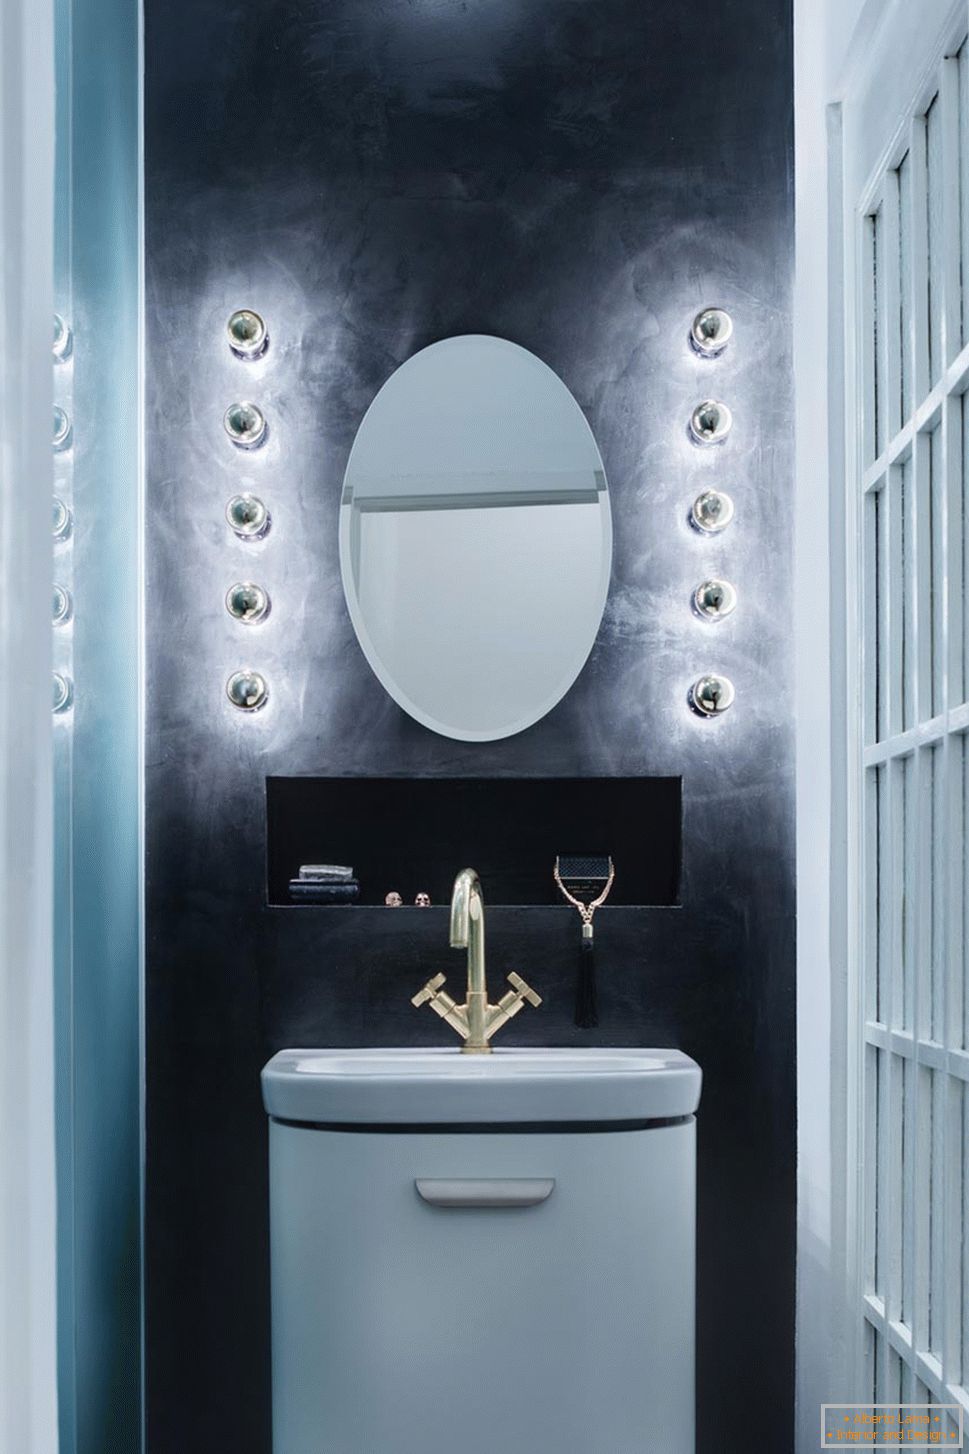 Moderni dizajn malog stana - dizajn kupaonice